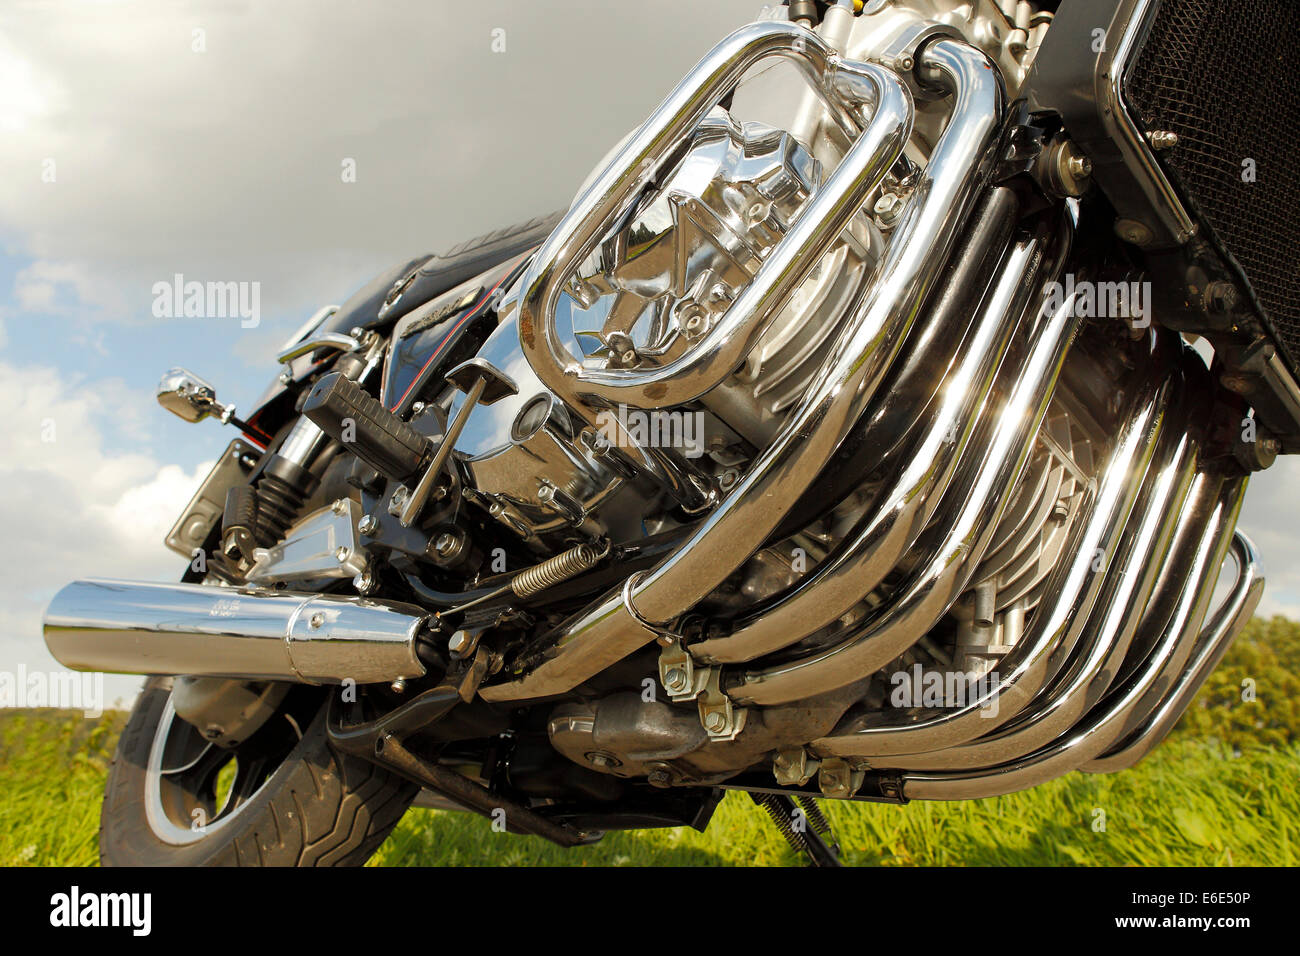 Motorcycle, Kawasaki Z1300 engine Stock Photo - Alamy